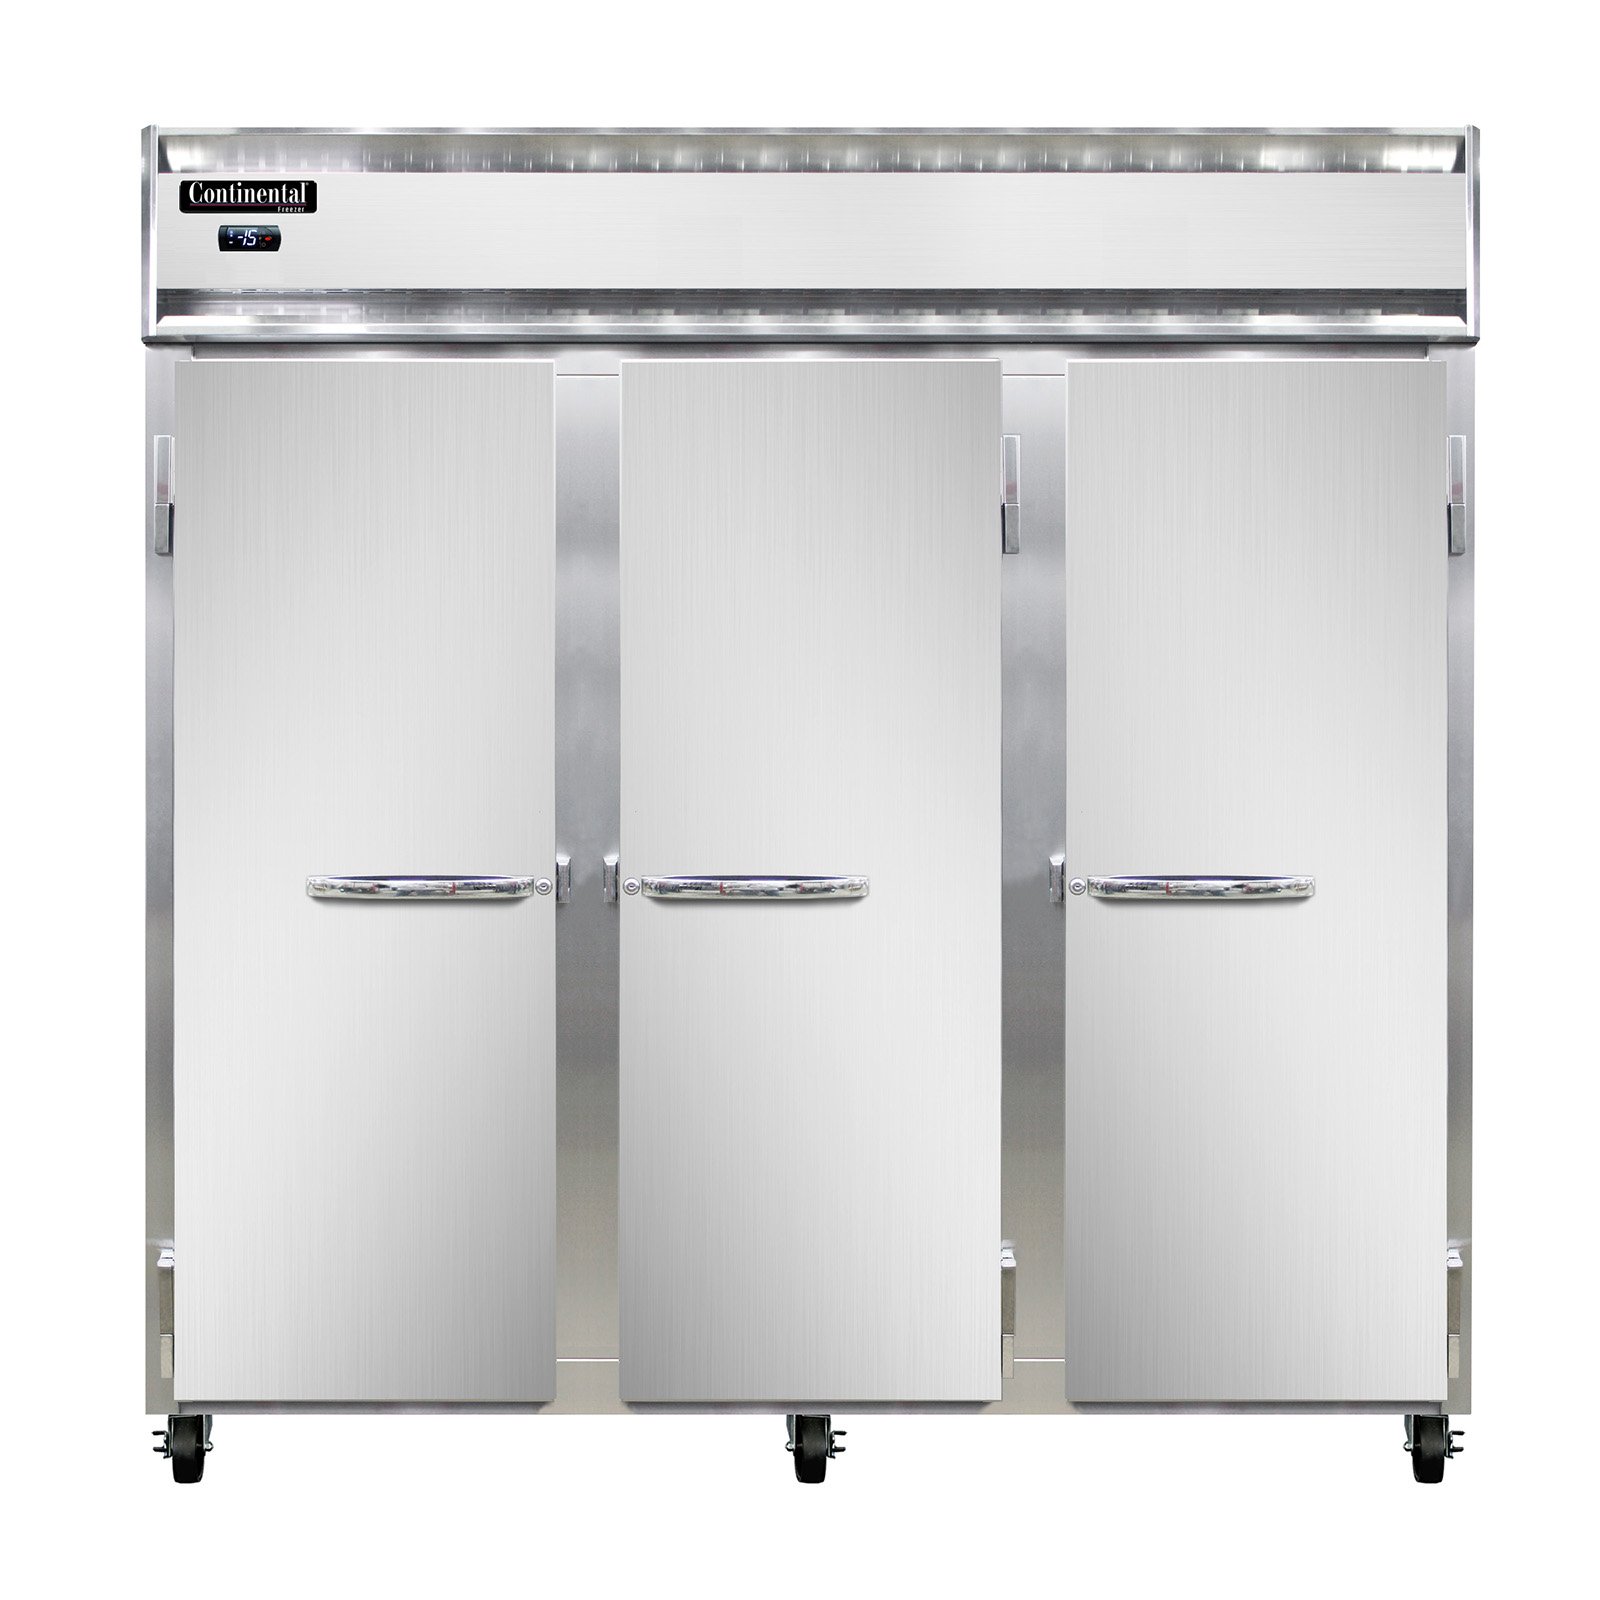 Continental Refrigerator 3F-LT-SS Reach-In Low Temperature Freezer